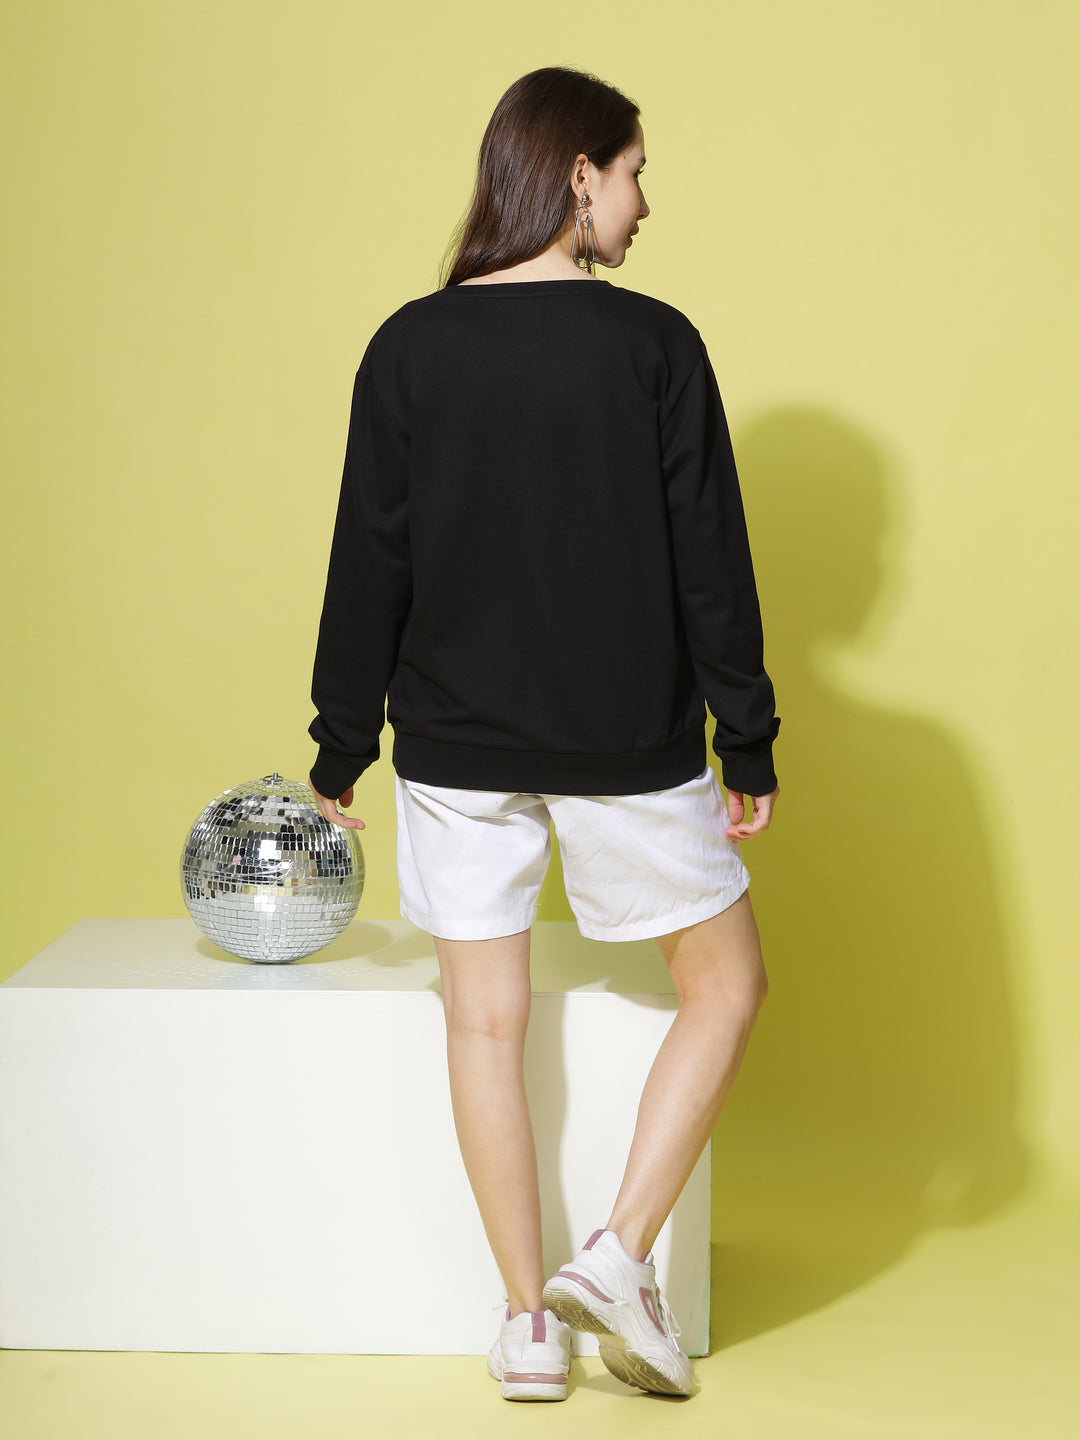  Sweatshirt  Find Your Perfect Fit: Women's Black Full Sleeve Sweatshirts - 9shines label 